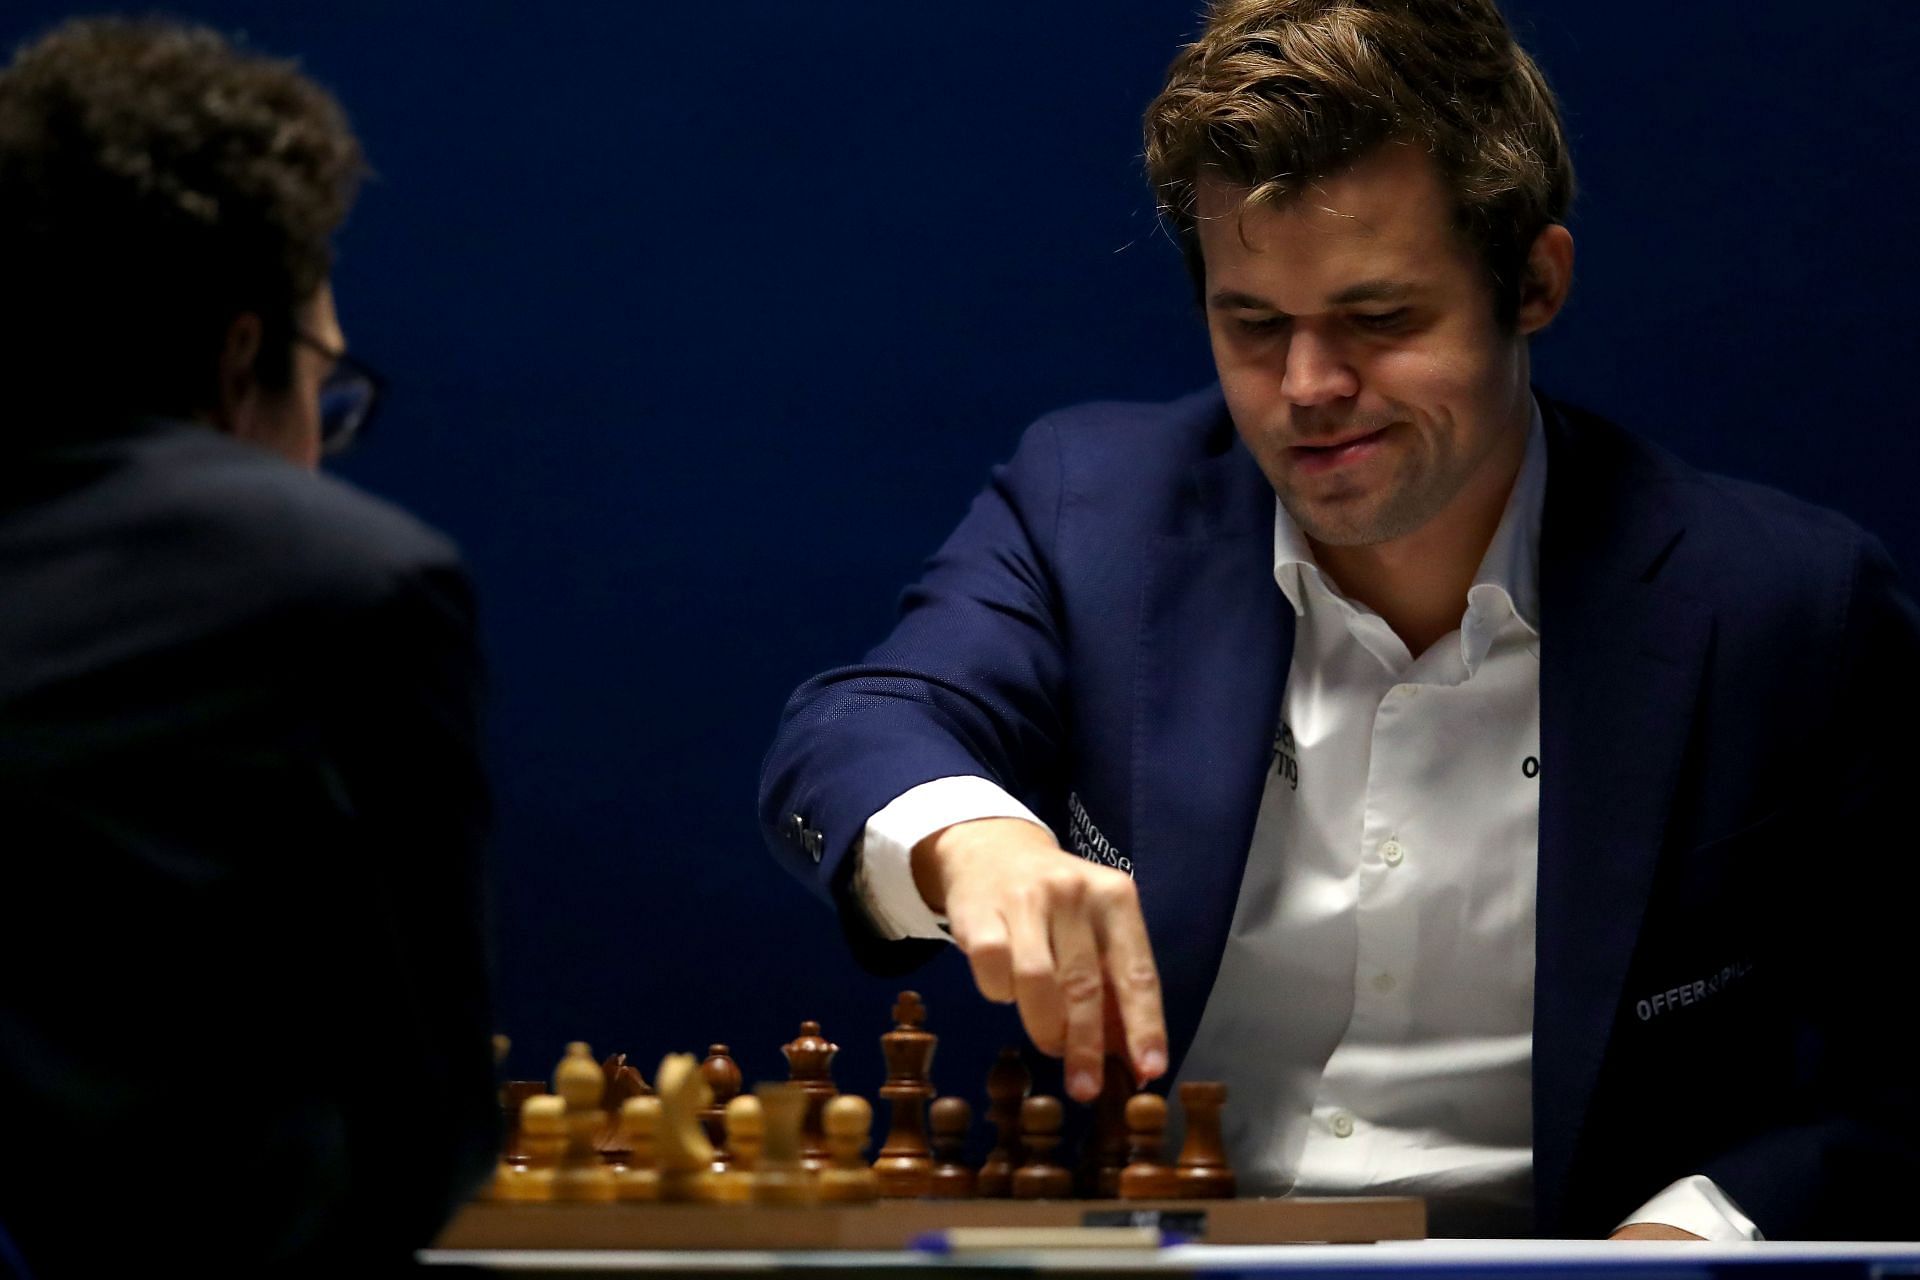 Magnus Carlsen defended his title against Caruana in 2018